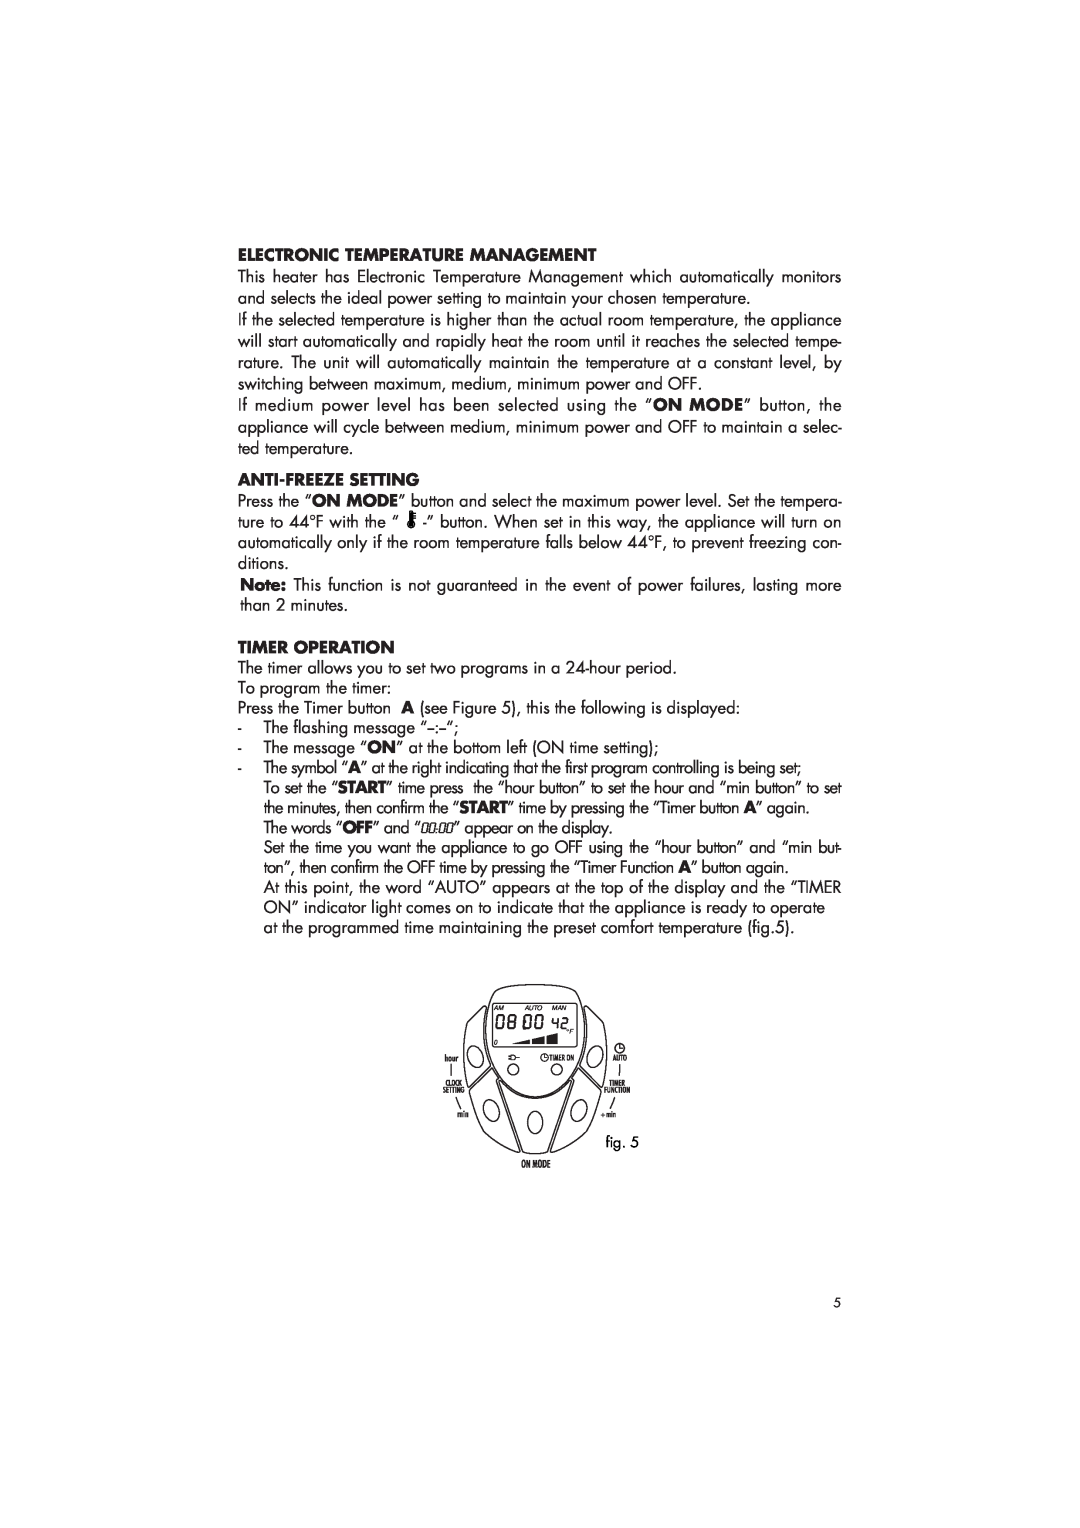 DeLonghi 6708EK manual Electronic Temperature Management, Anti-Freezesetting, Timer Operation 